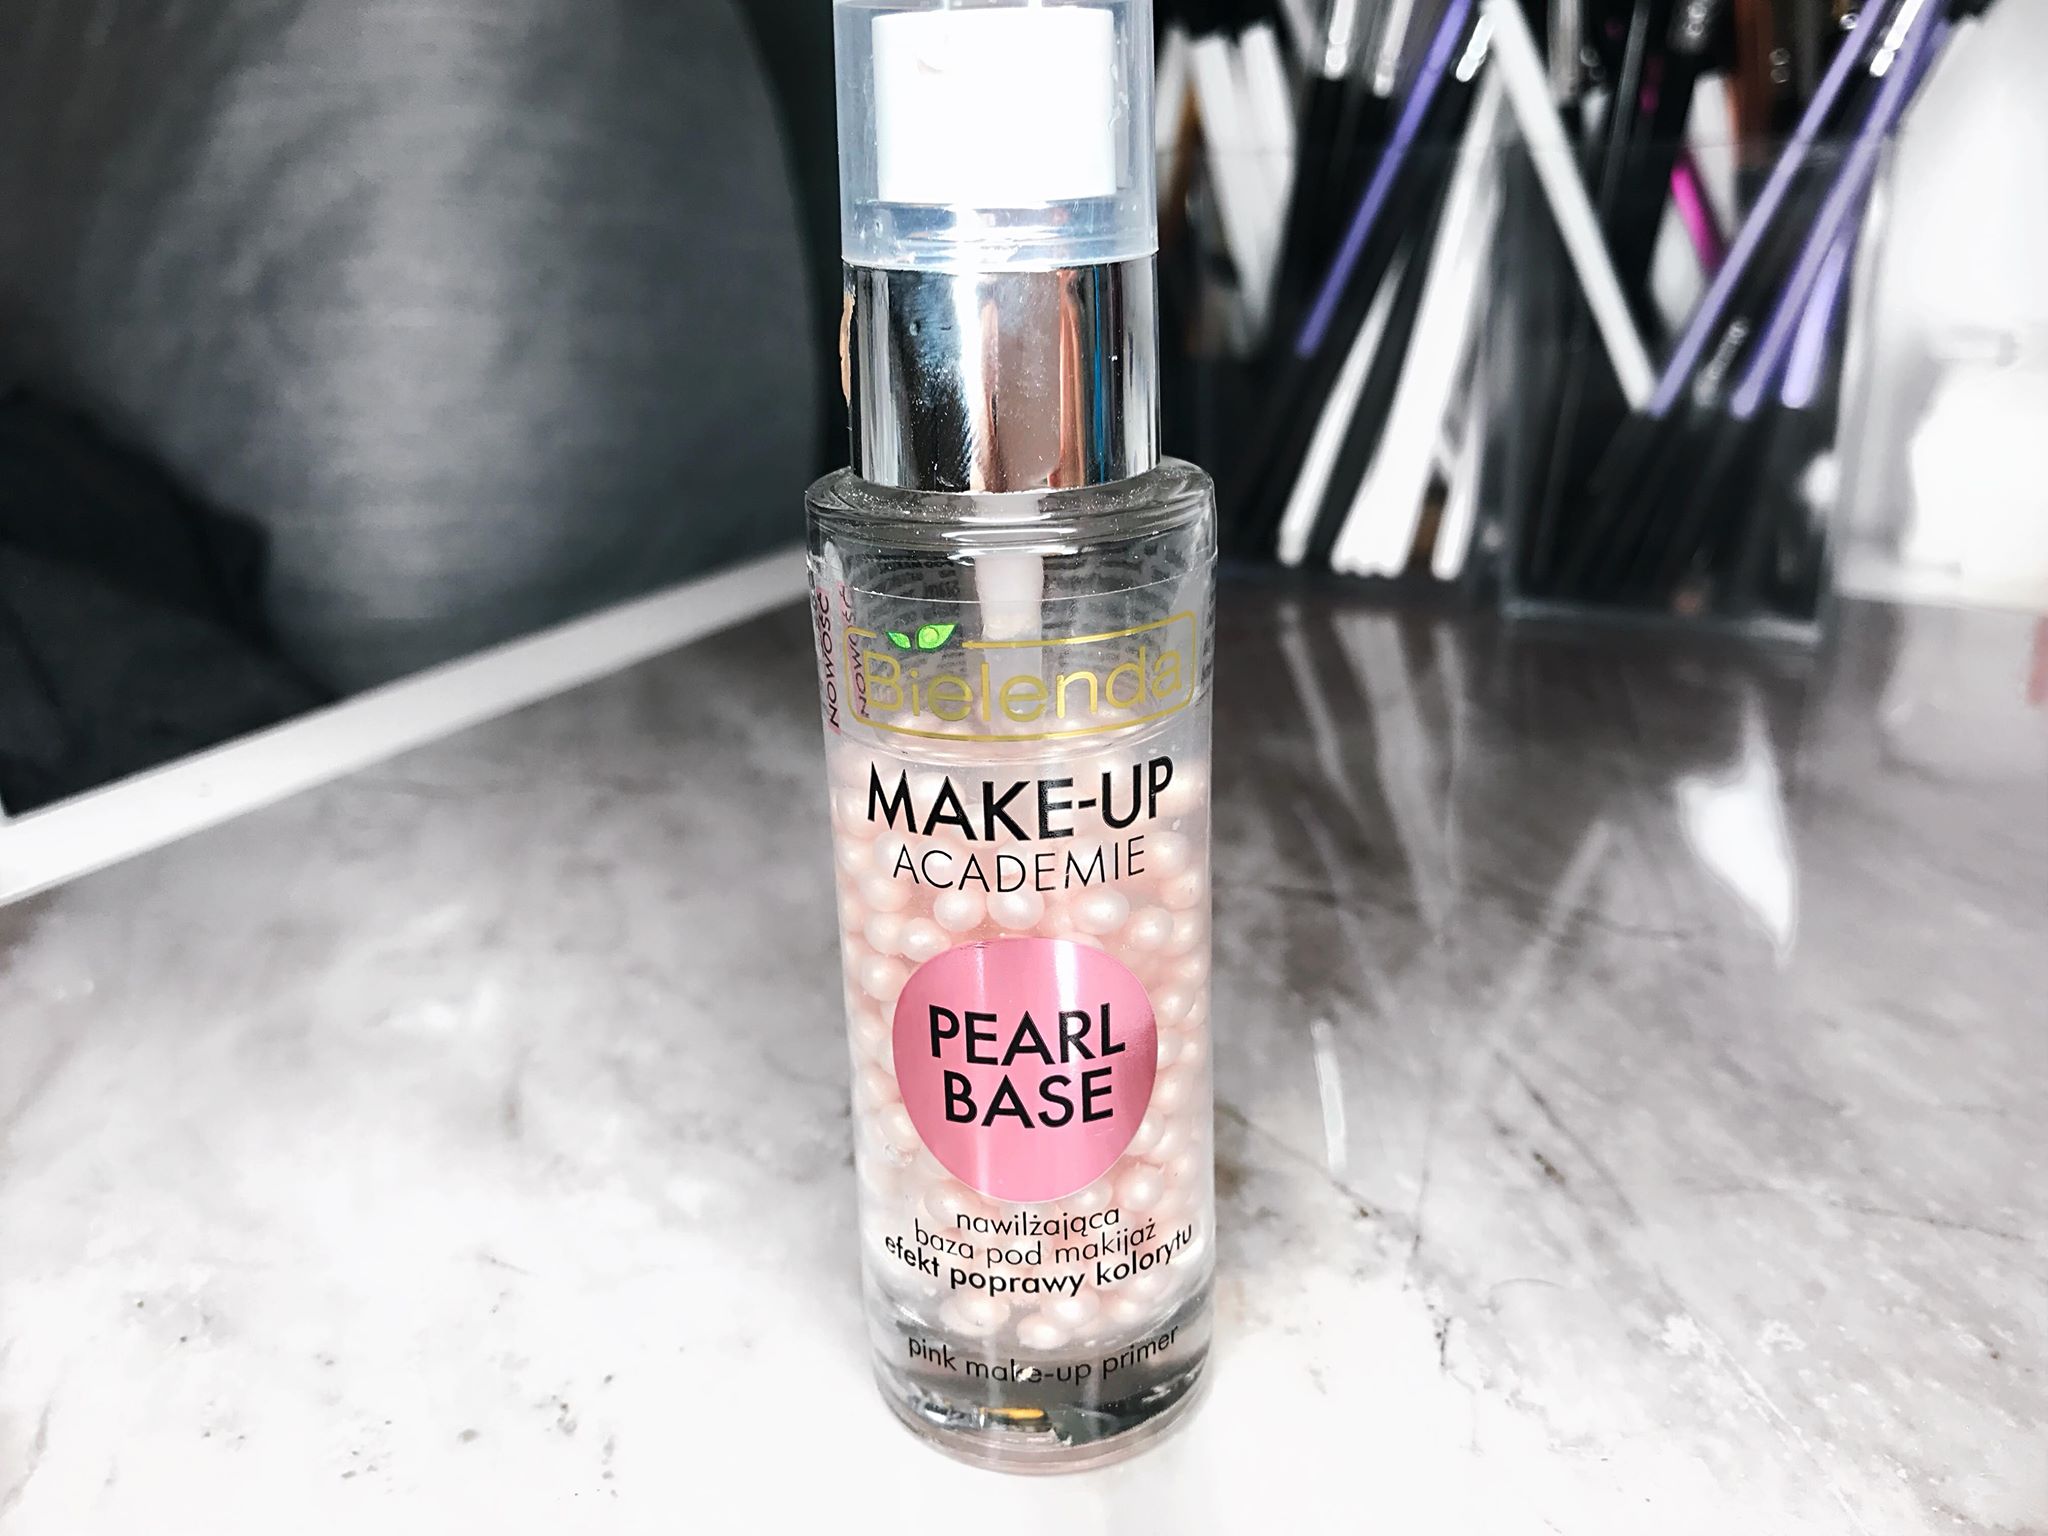 bielenda pearl base makeup academie